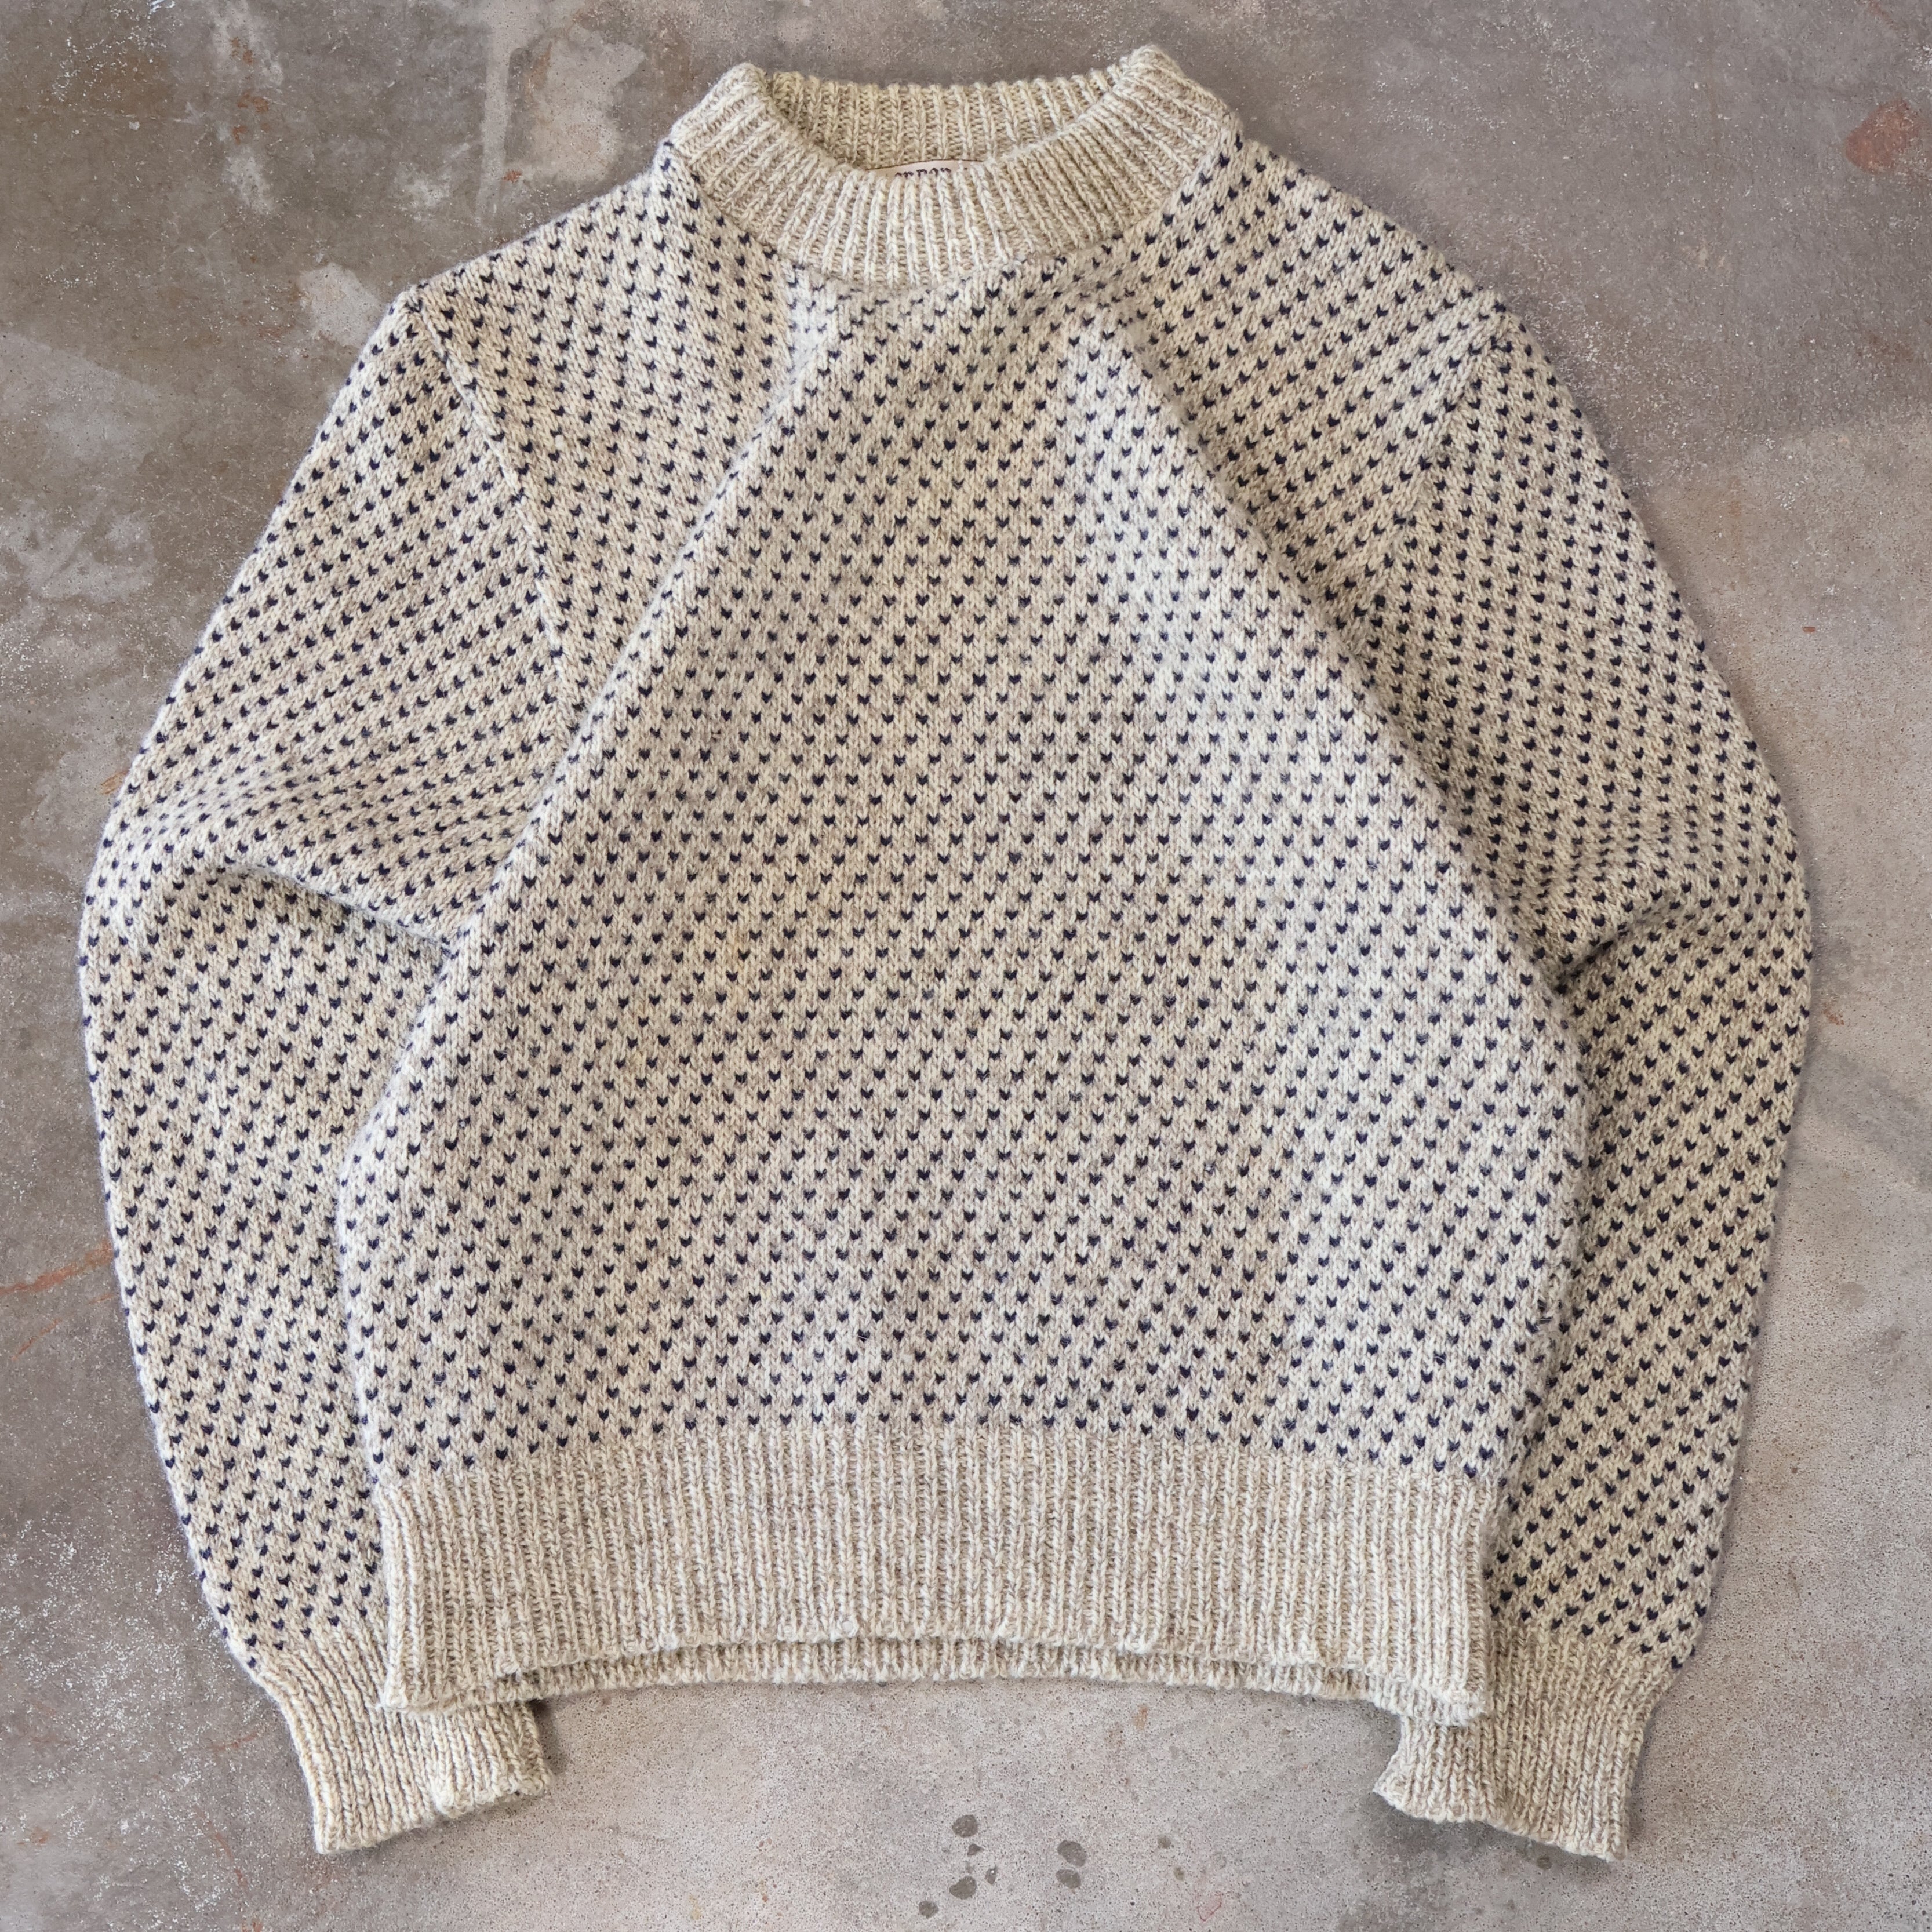 Tan/Navy Wool Knit Sweater 90s (Medium)